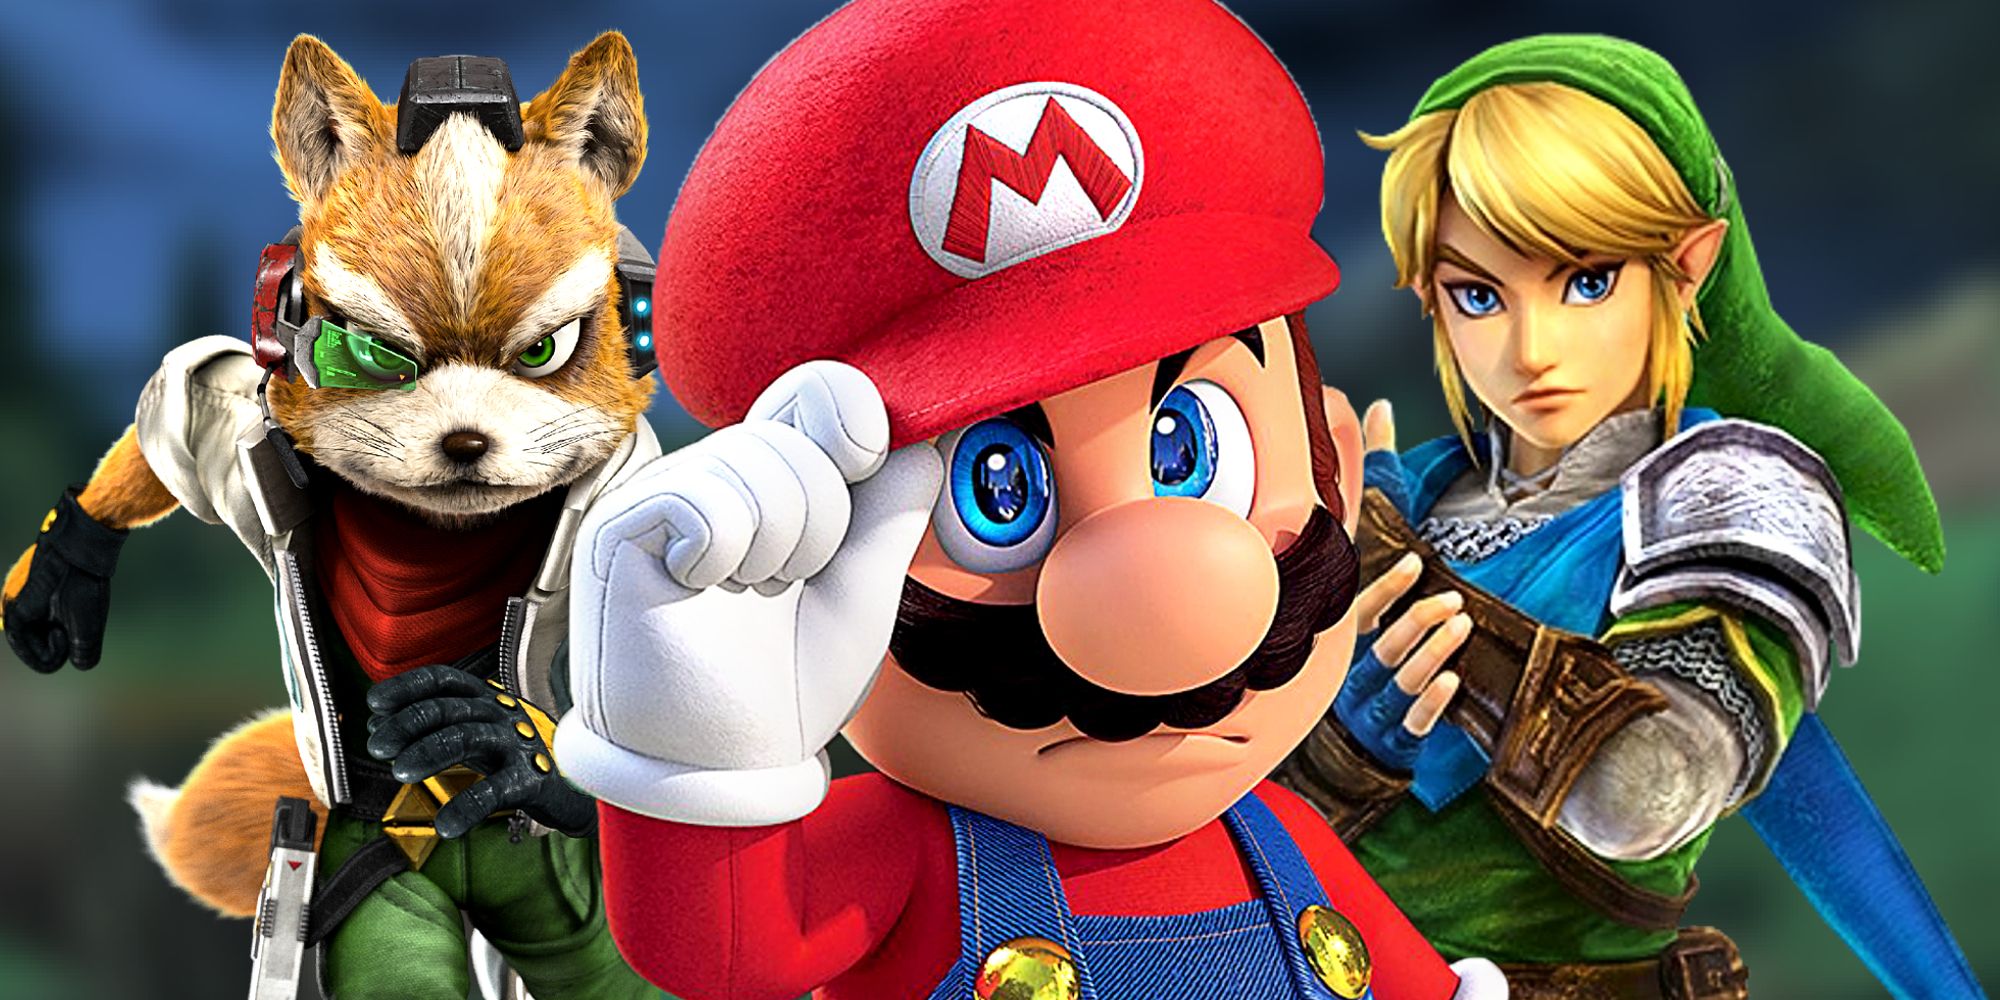 Mario, Link, and Starfox From Super Smash Bros